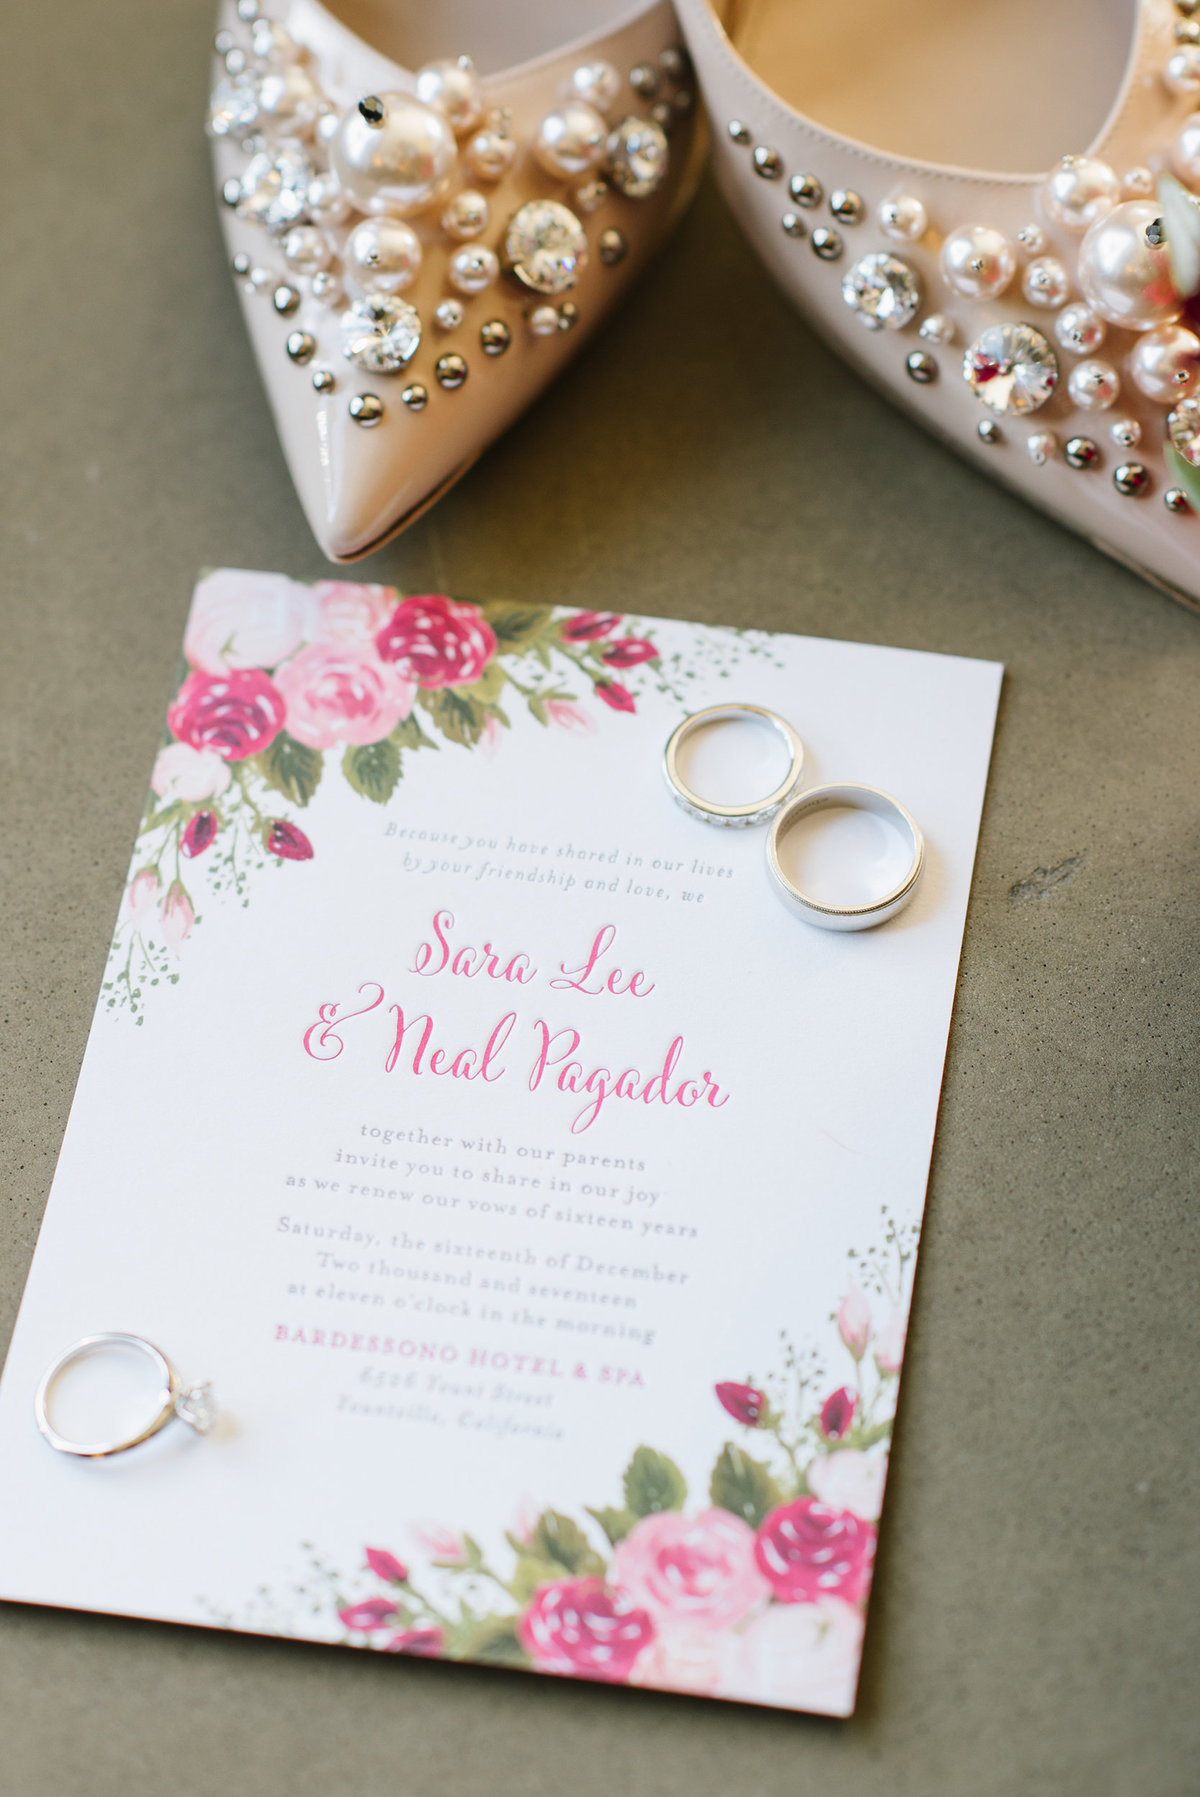 WeddingInvitations-PaperByTheBay-Napa-CaitlinOReilly-013